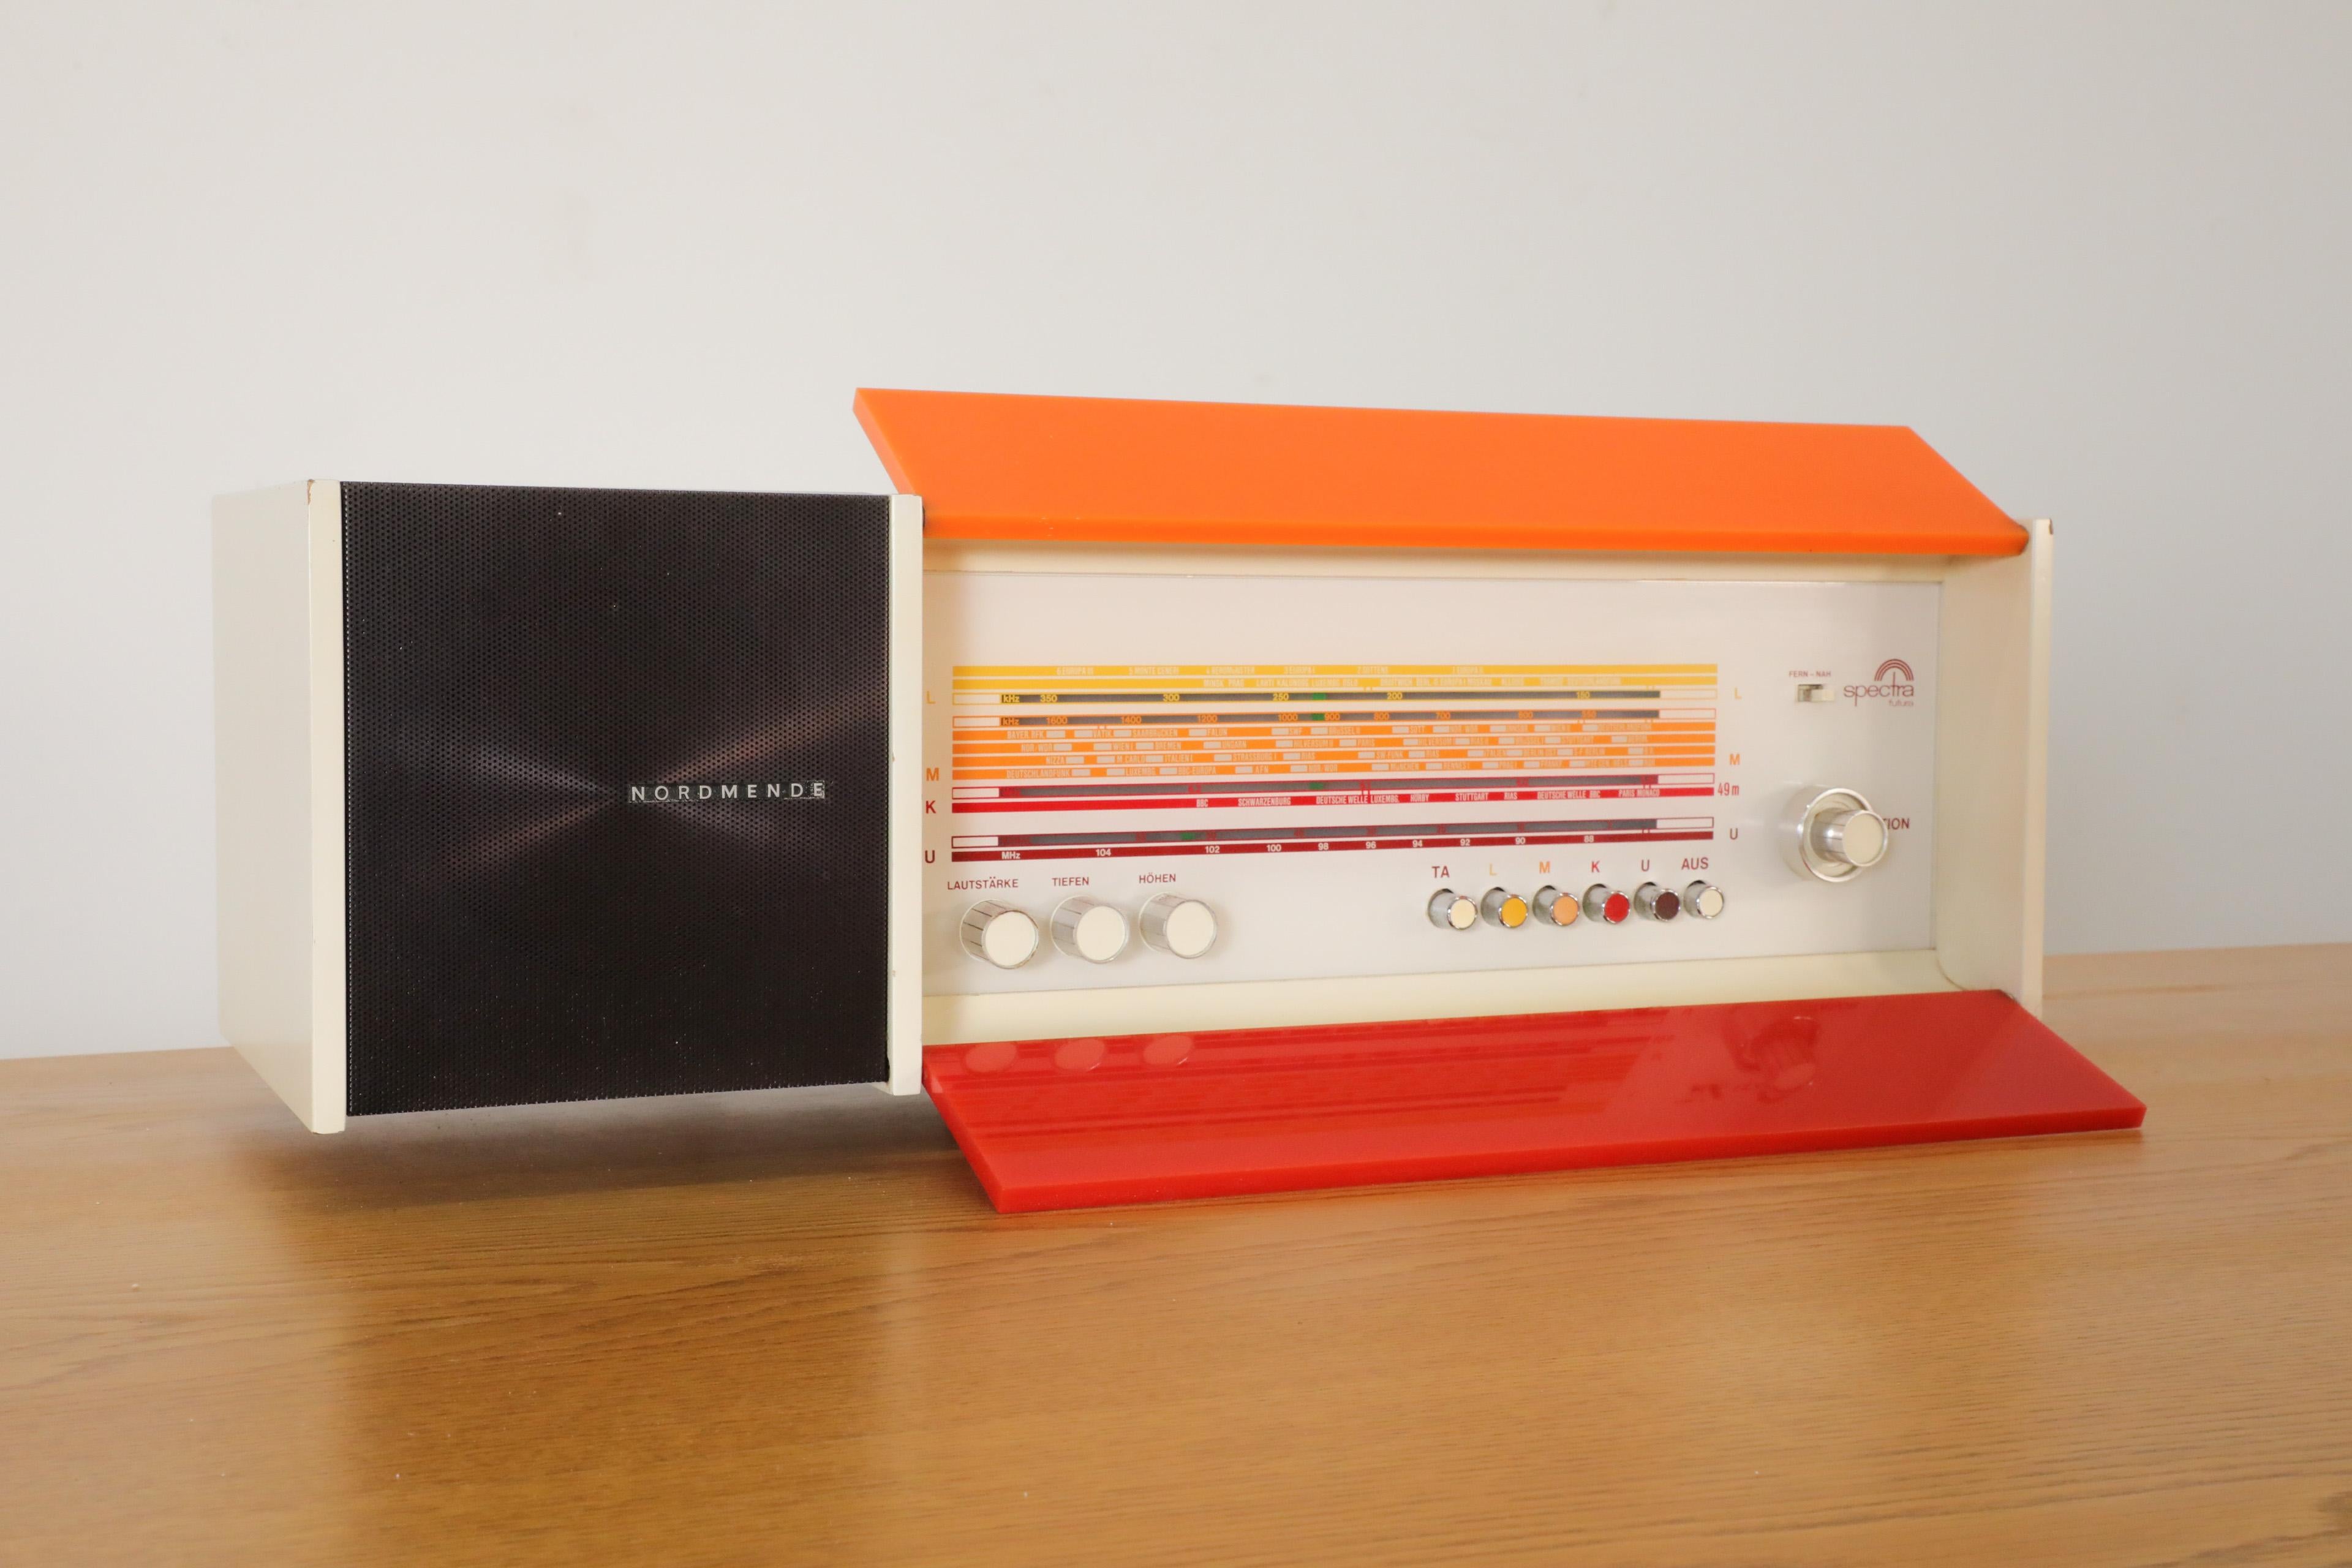 Mid-20th Century Raymond Loewy Designed Nordmende Spectra Futura Transistor Radio in Red & Orange